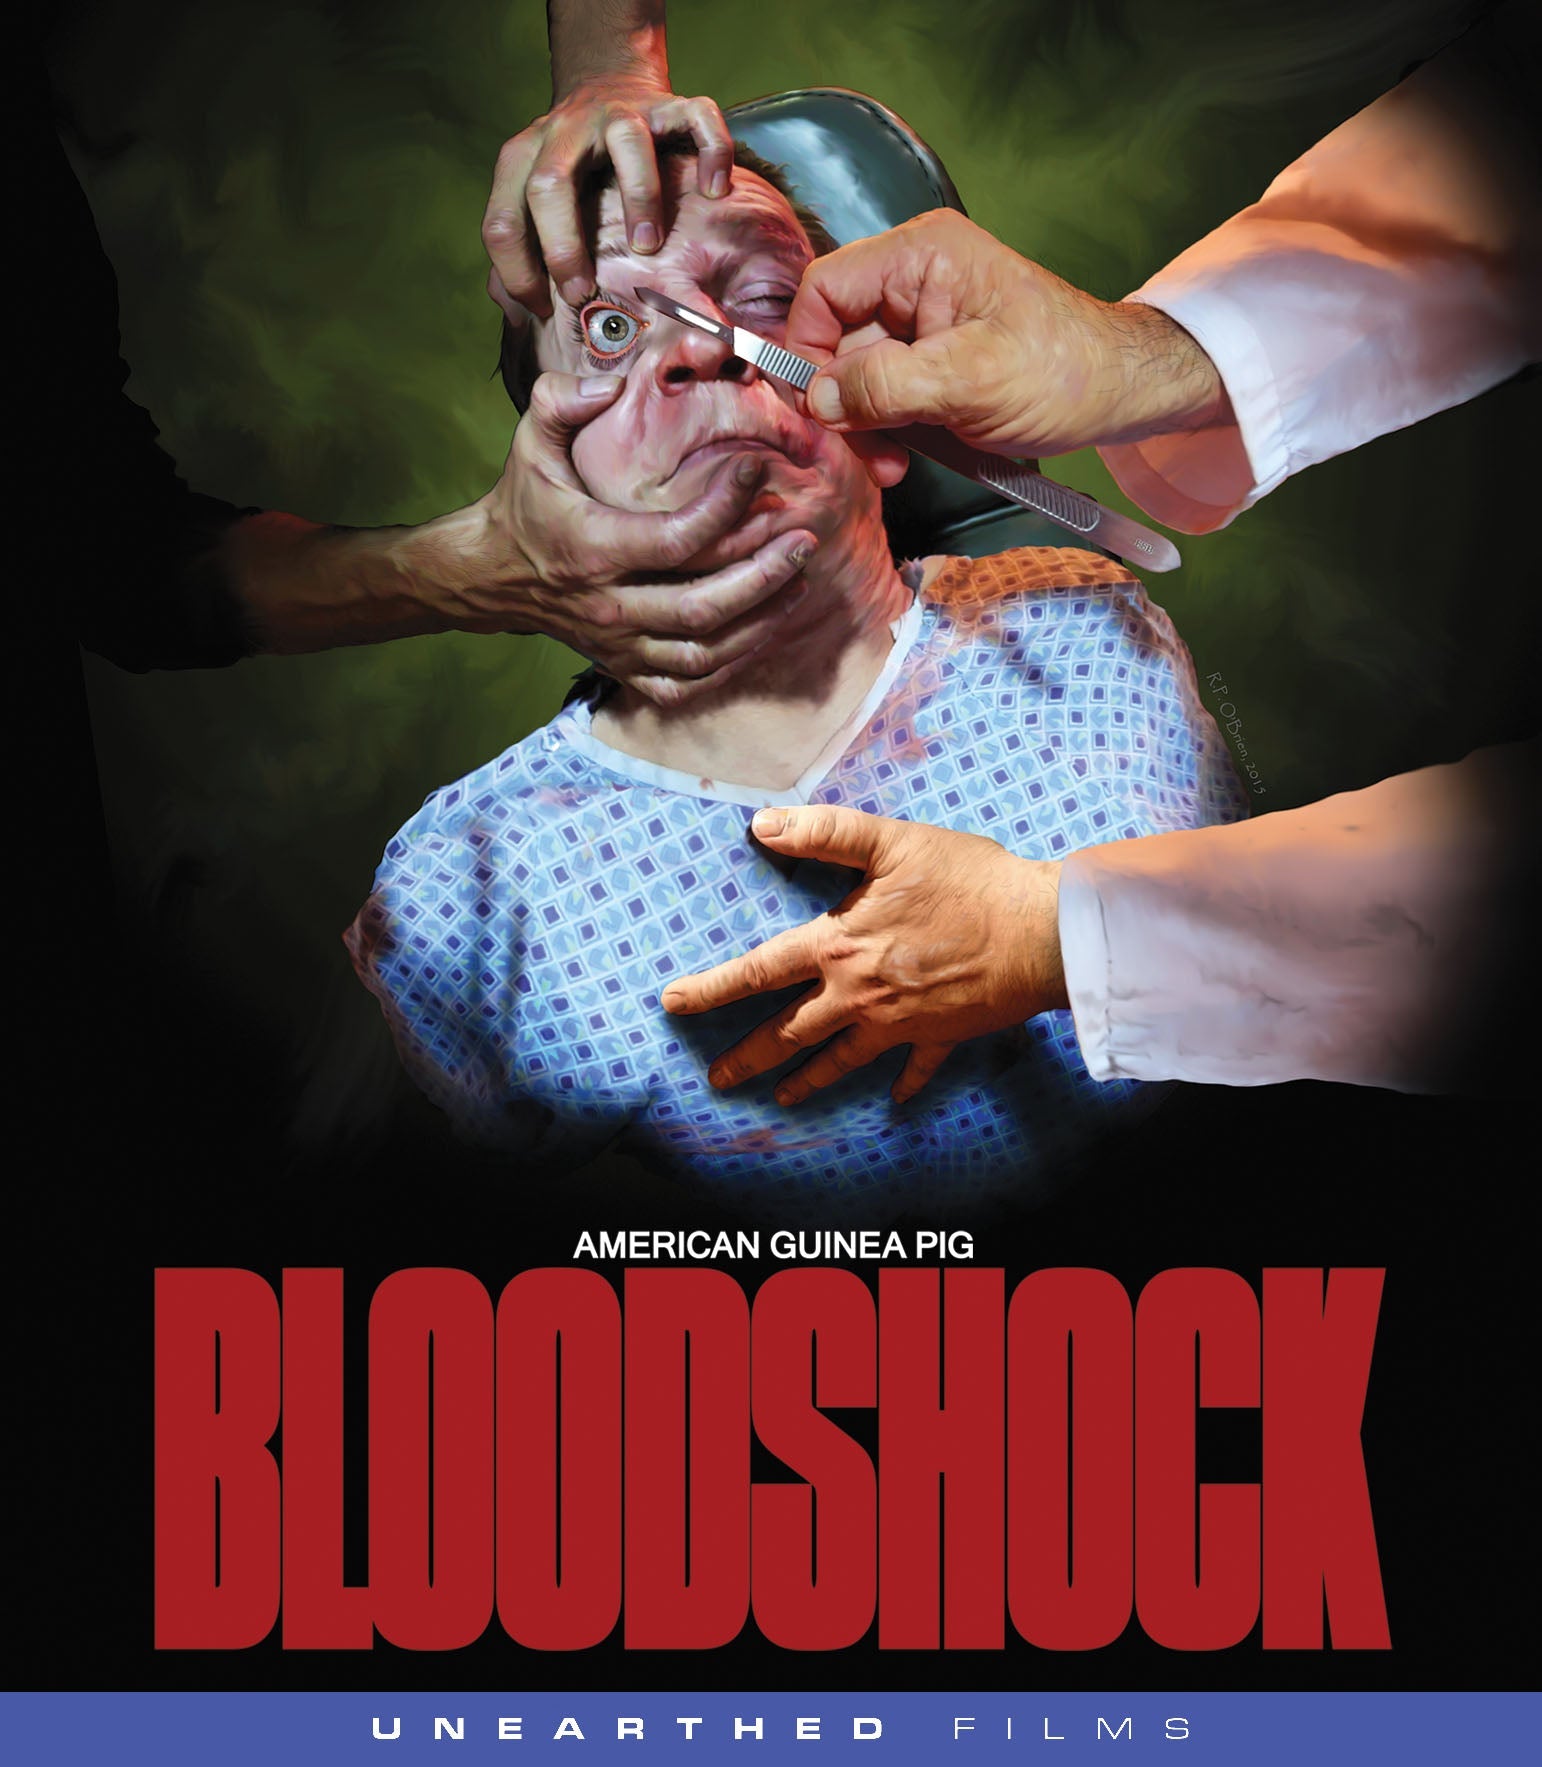 American Guinea Pig: Bloodshock Blu-Ray Blu-Ray